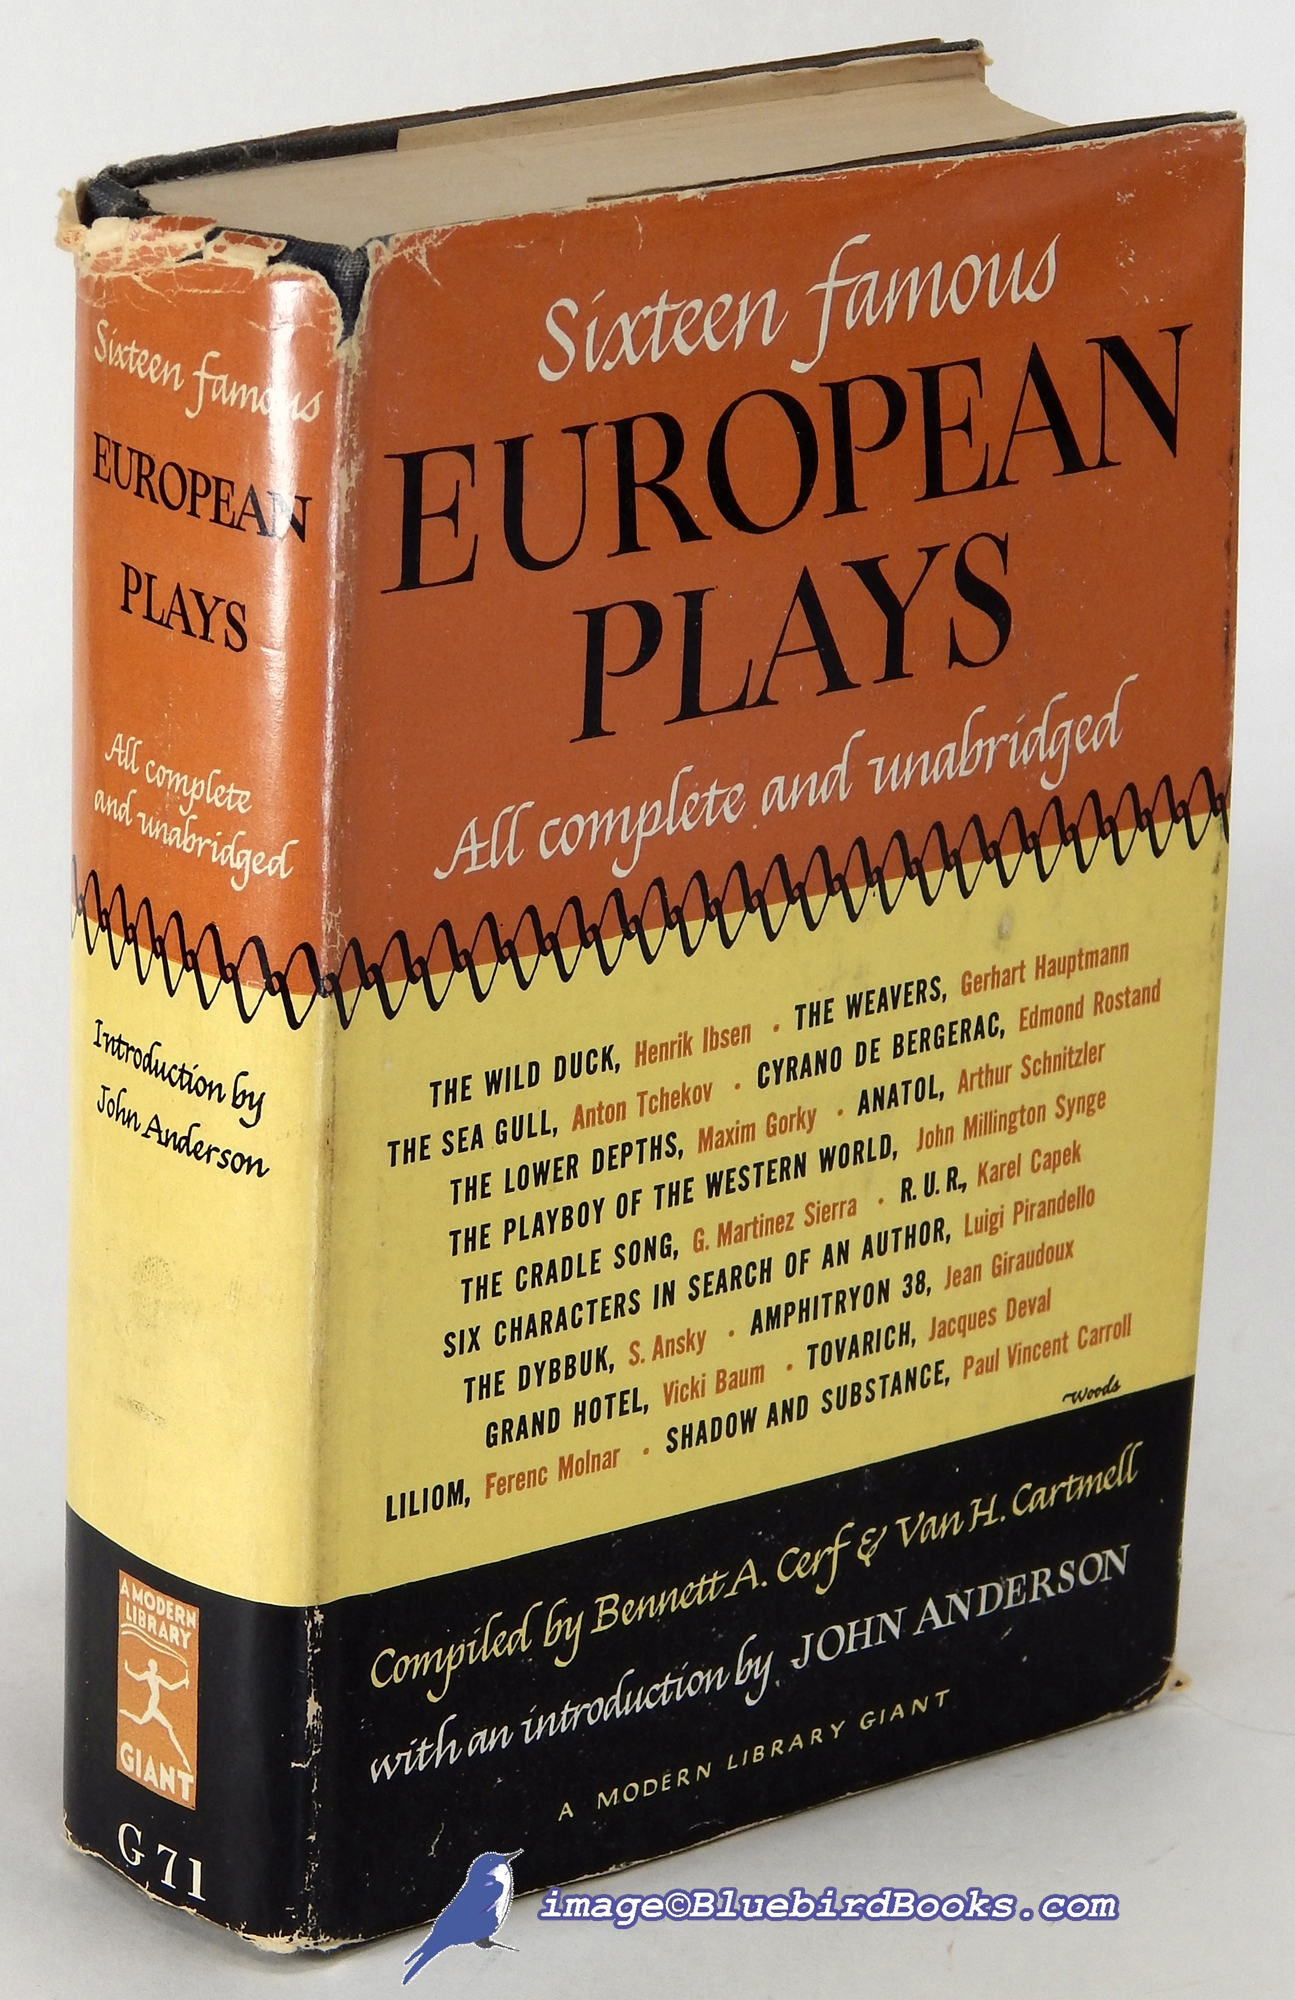 CERF, BENNETT; CARTMELL, VAN H. (COMPILERS) - Sixteen Famous European Plays (Modern Library Giant #G-71. 1)